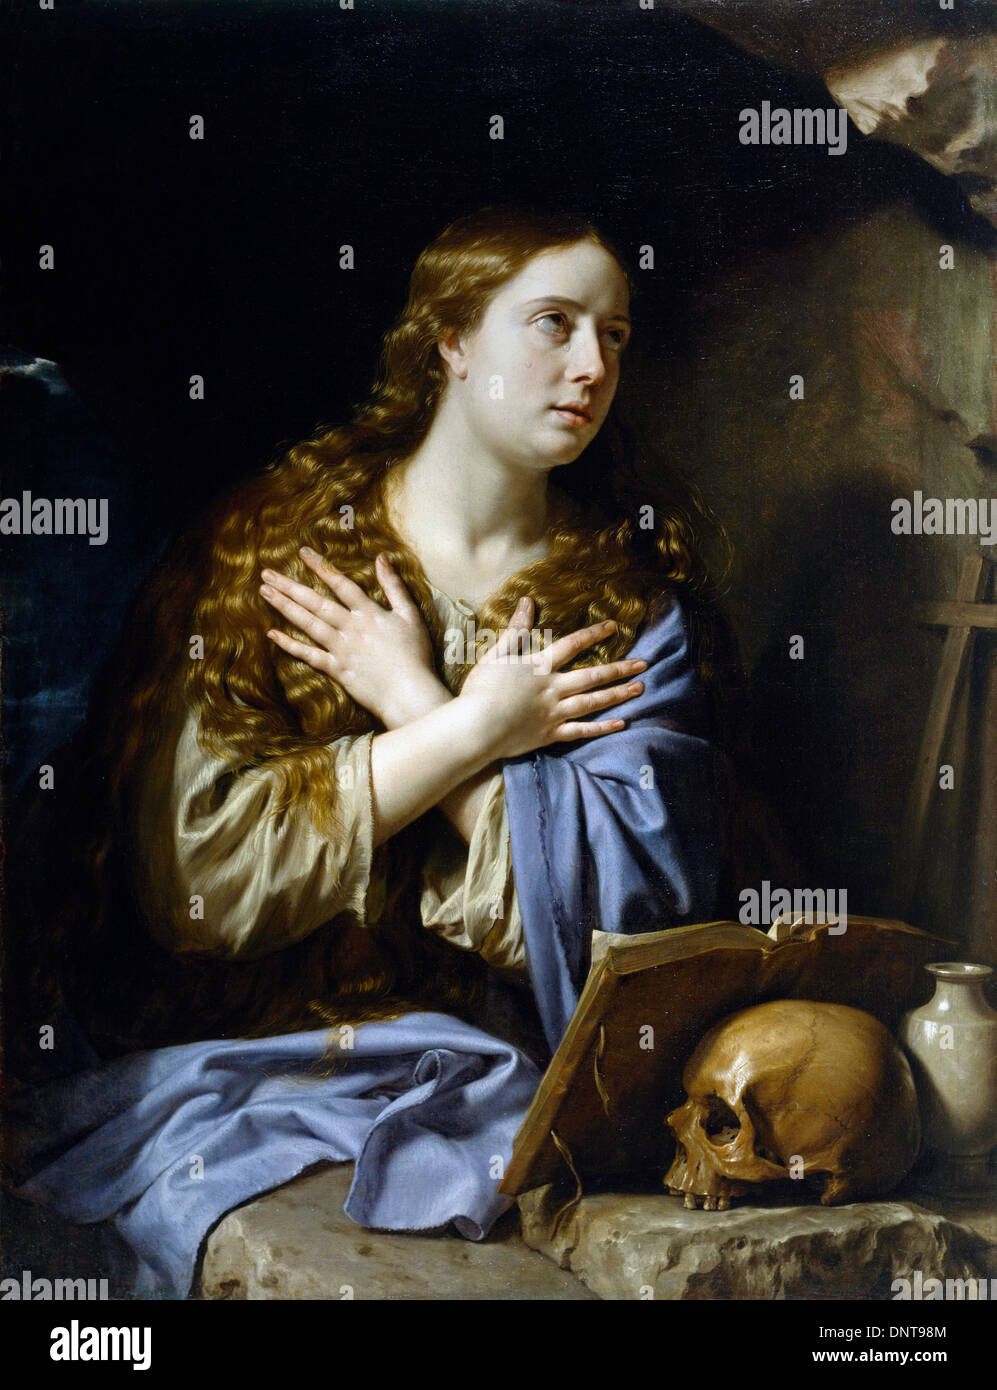 Phillippe de Champaigne, The Repentant Magdalen 1648 Oil on canvas. Museum of Fine Arts, Houston, Texas, USA. Stock Photo